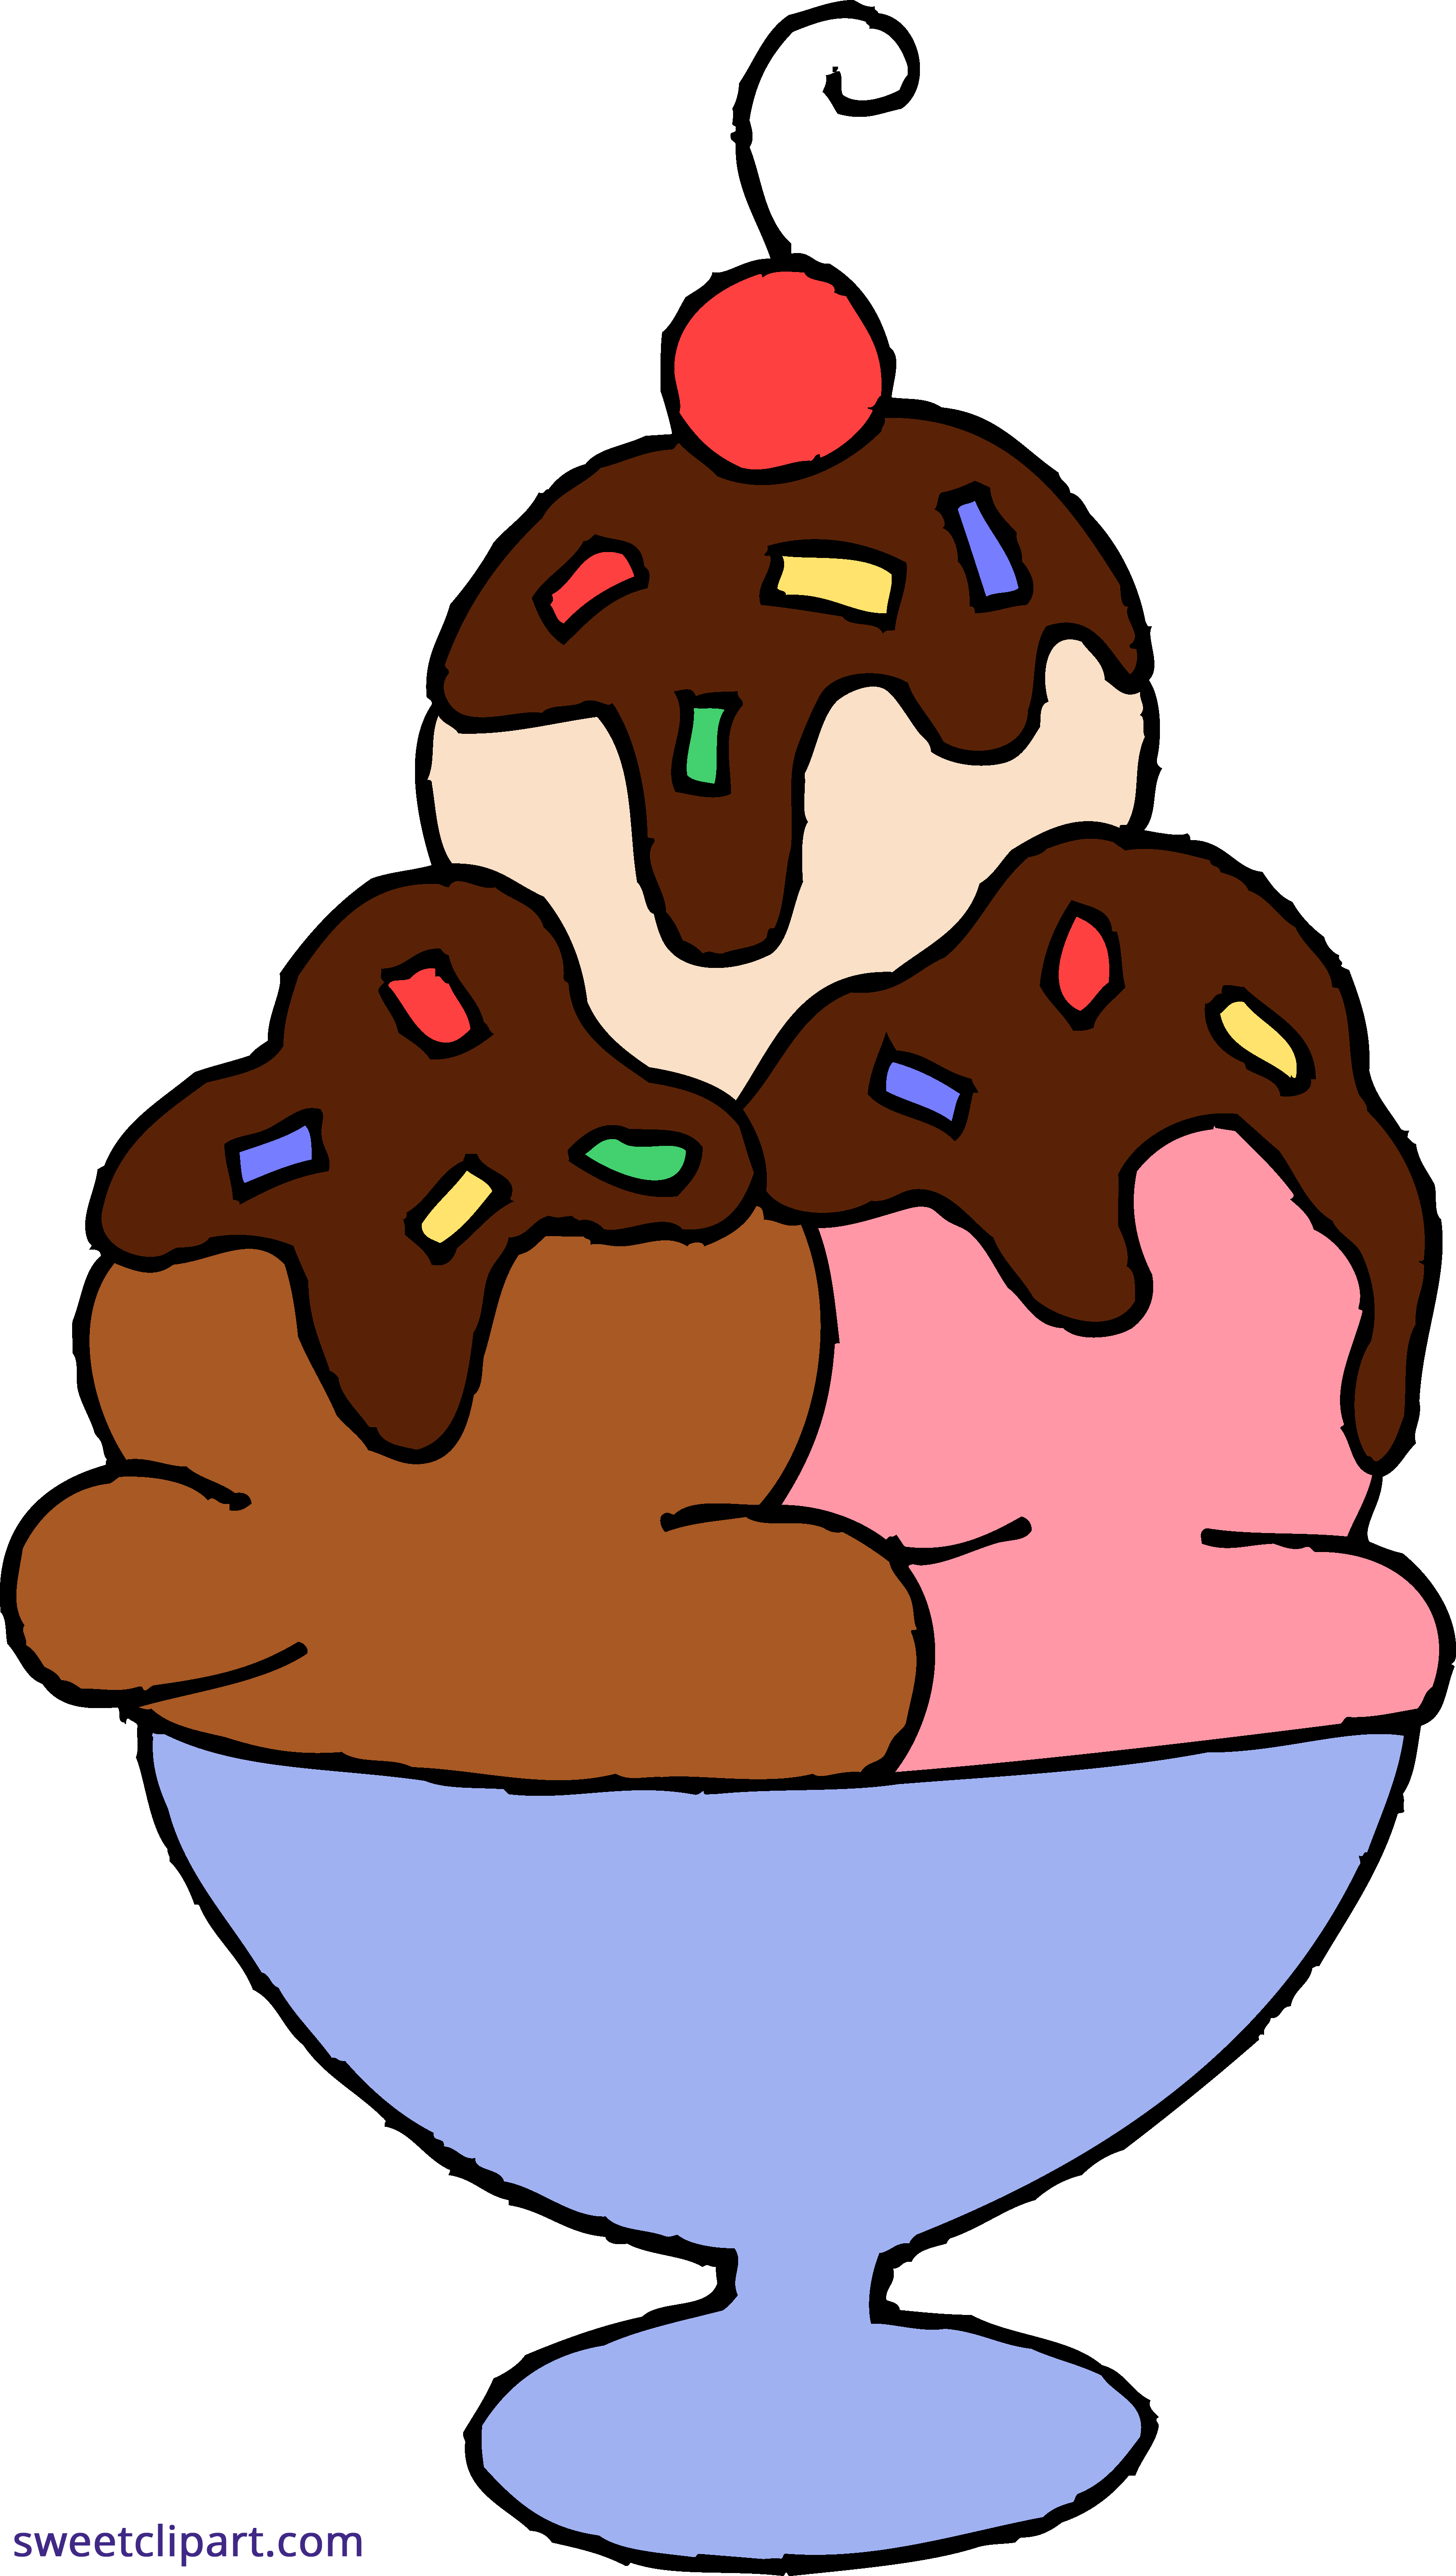 Ice cream sundae sweet. Email clipart simple object